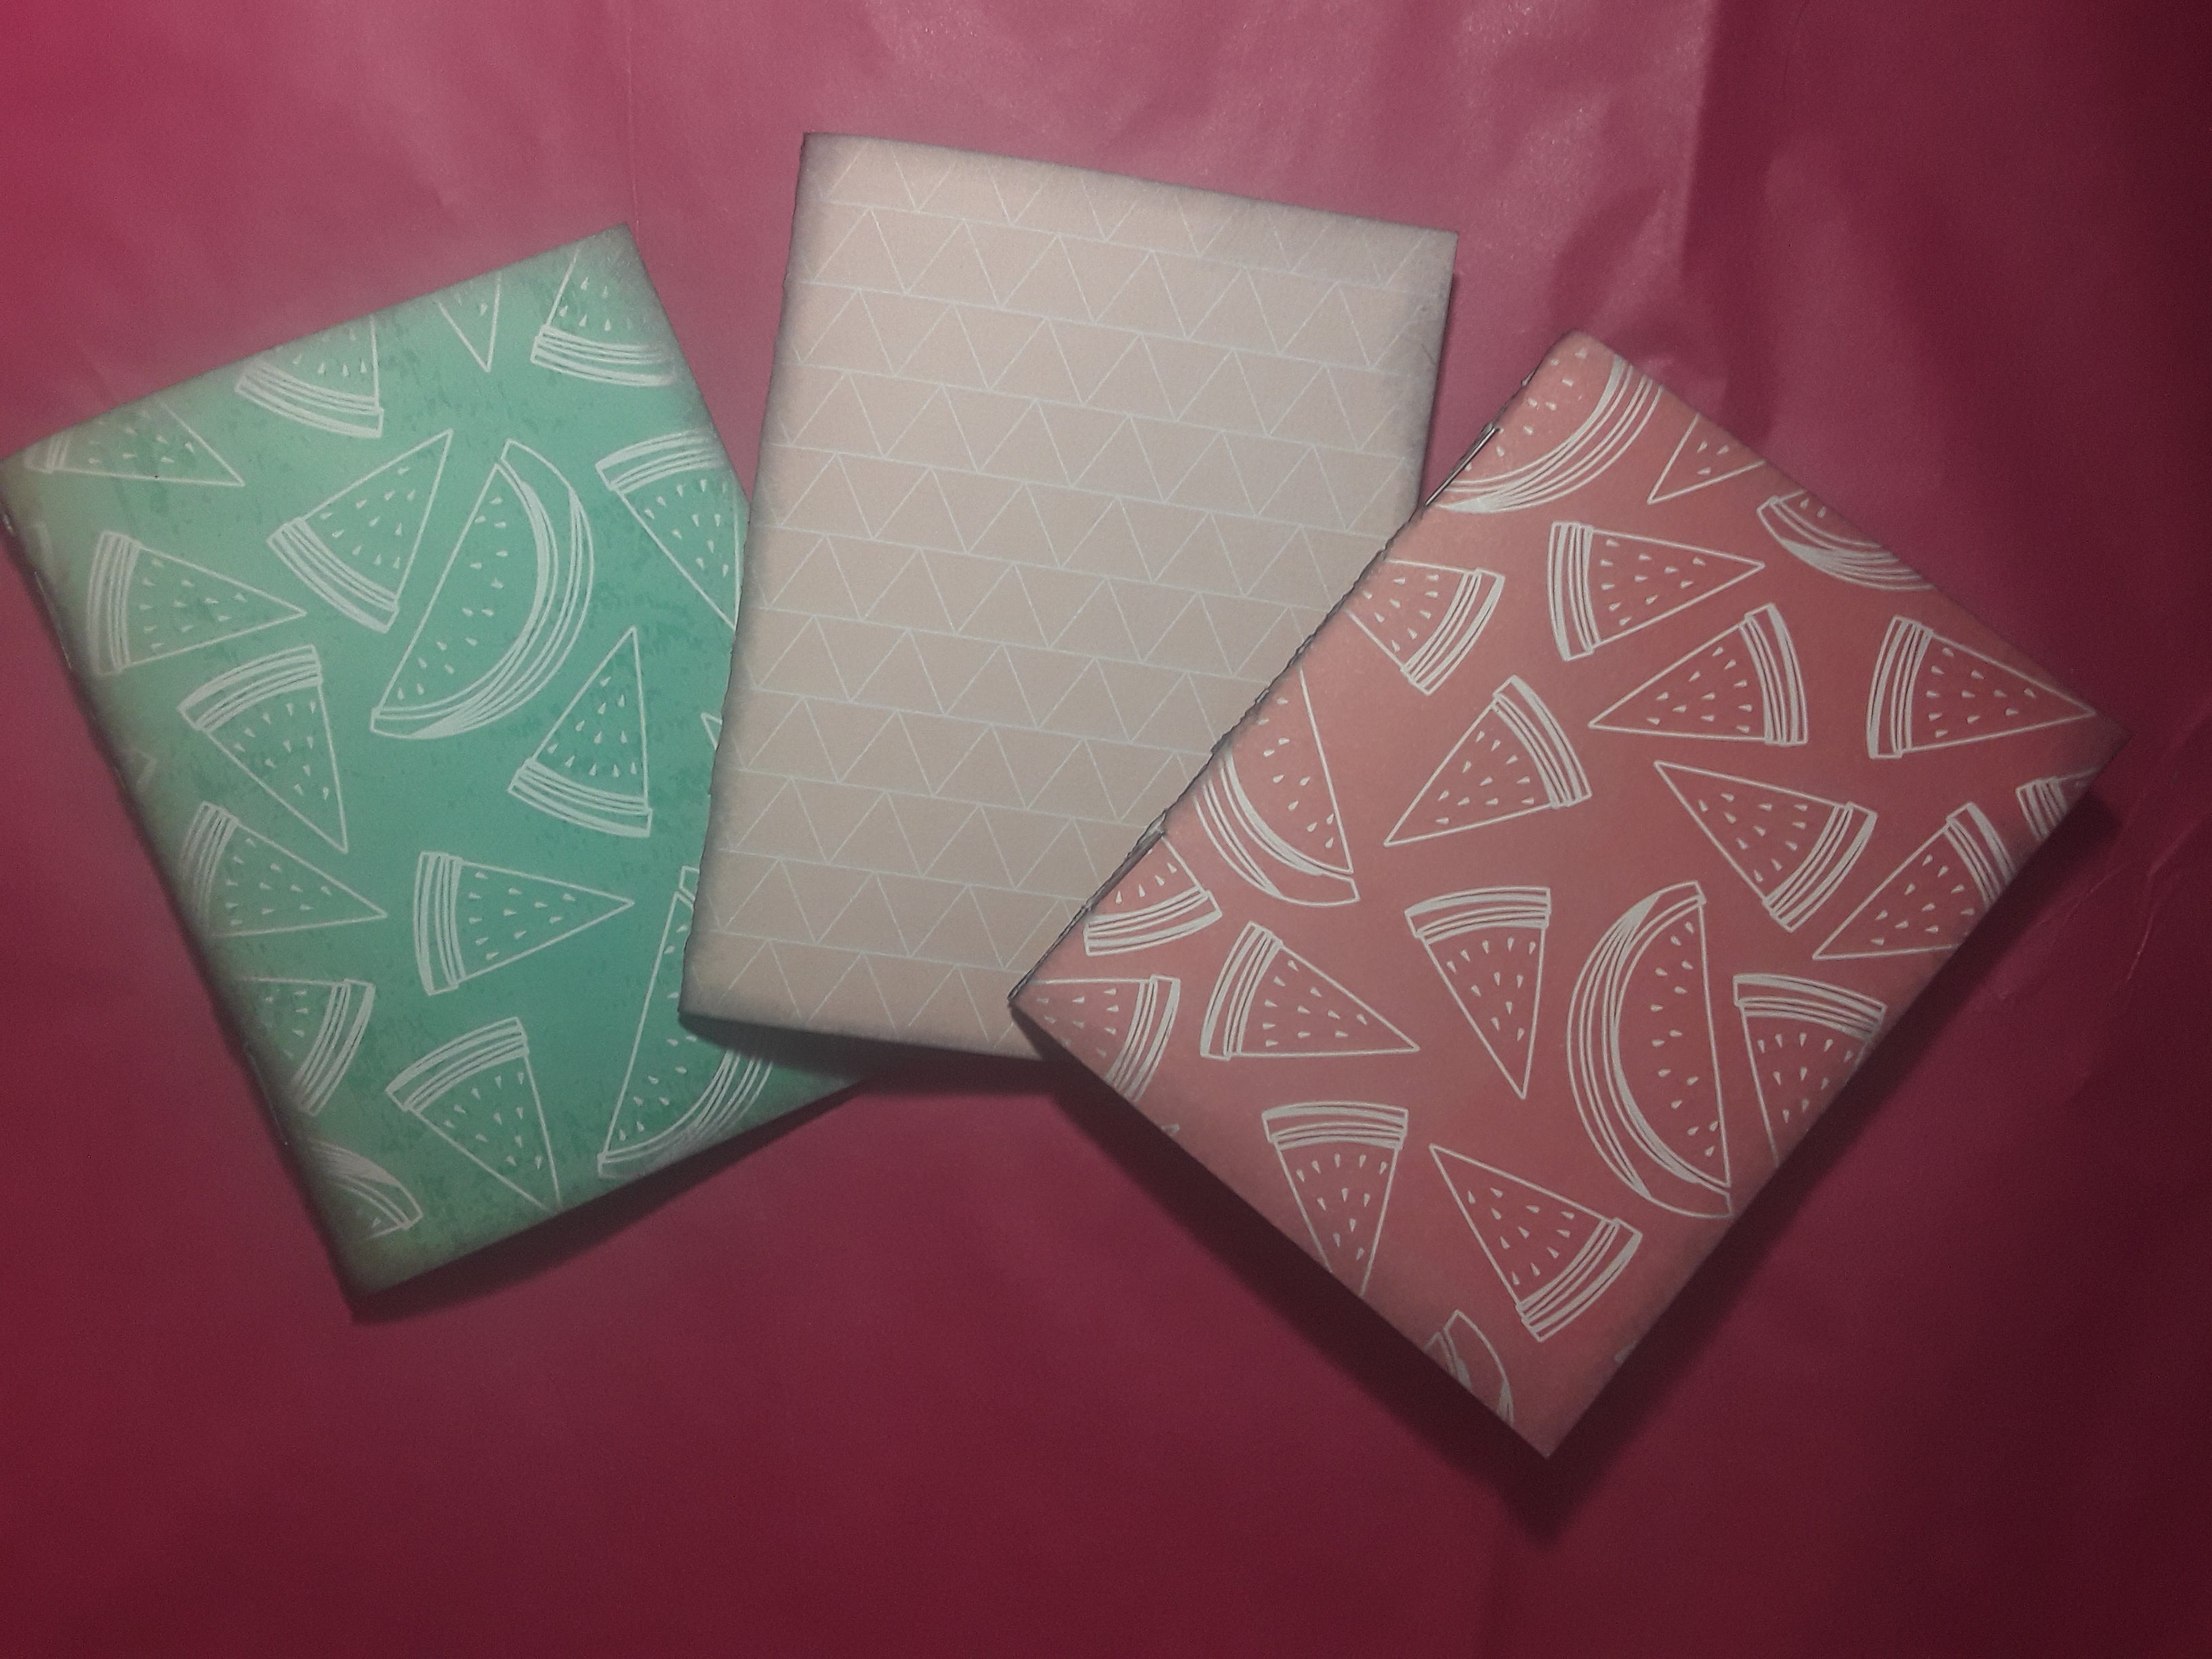 Three Medium Sized Notebooks